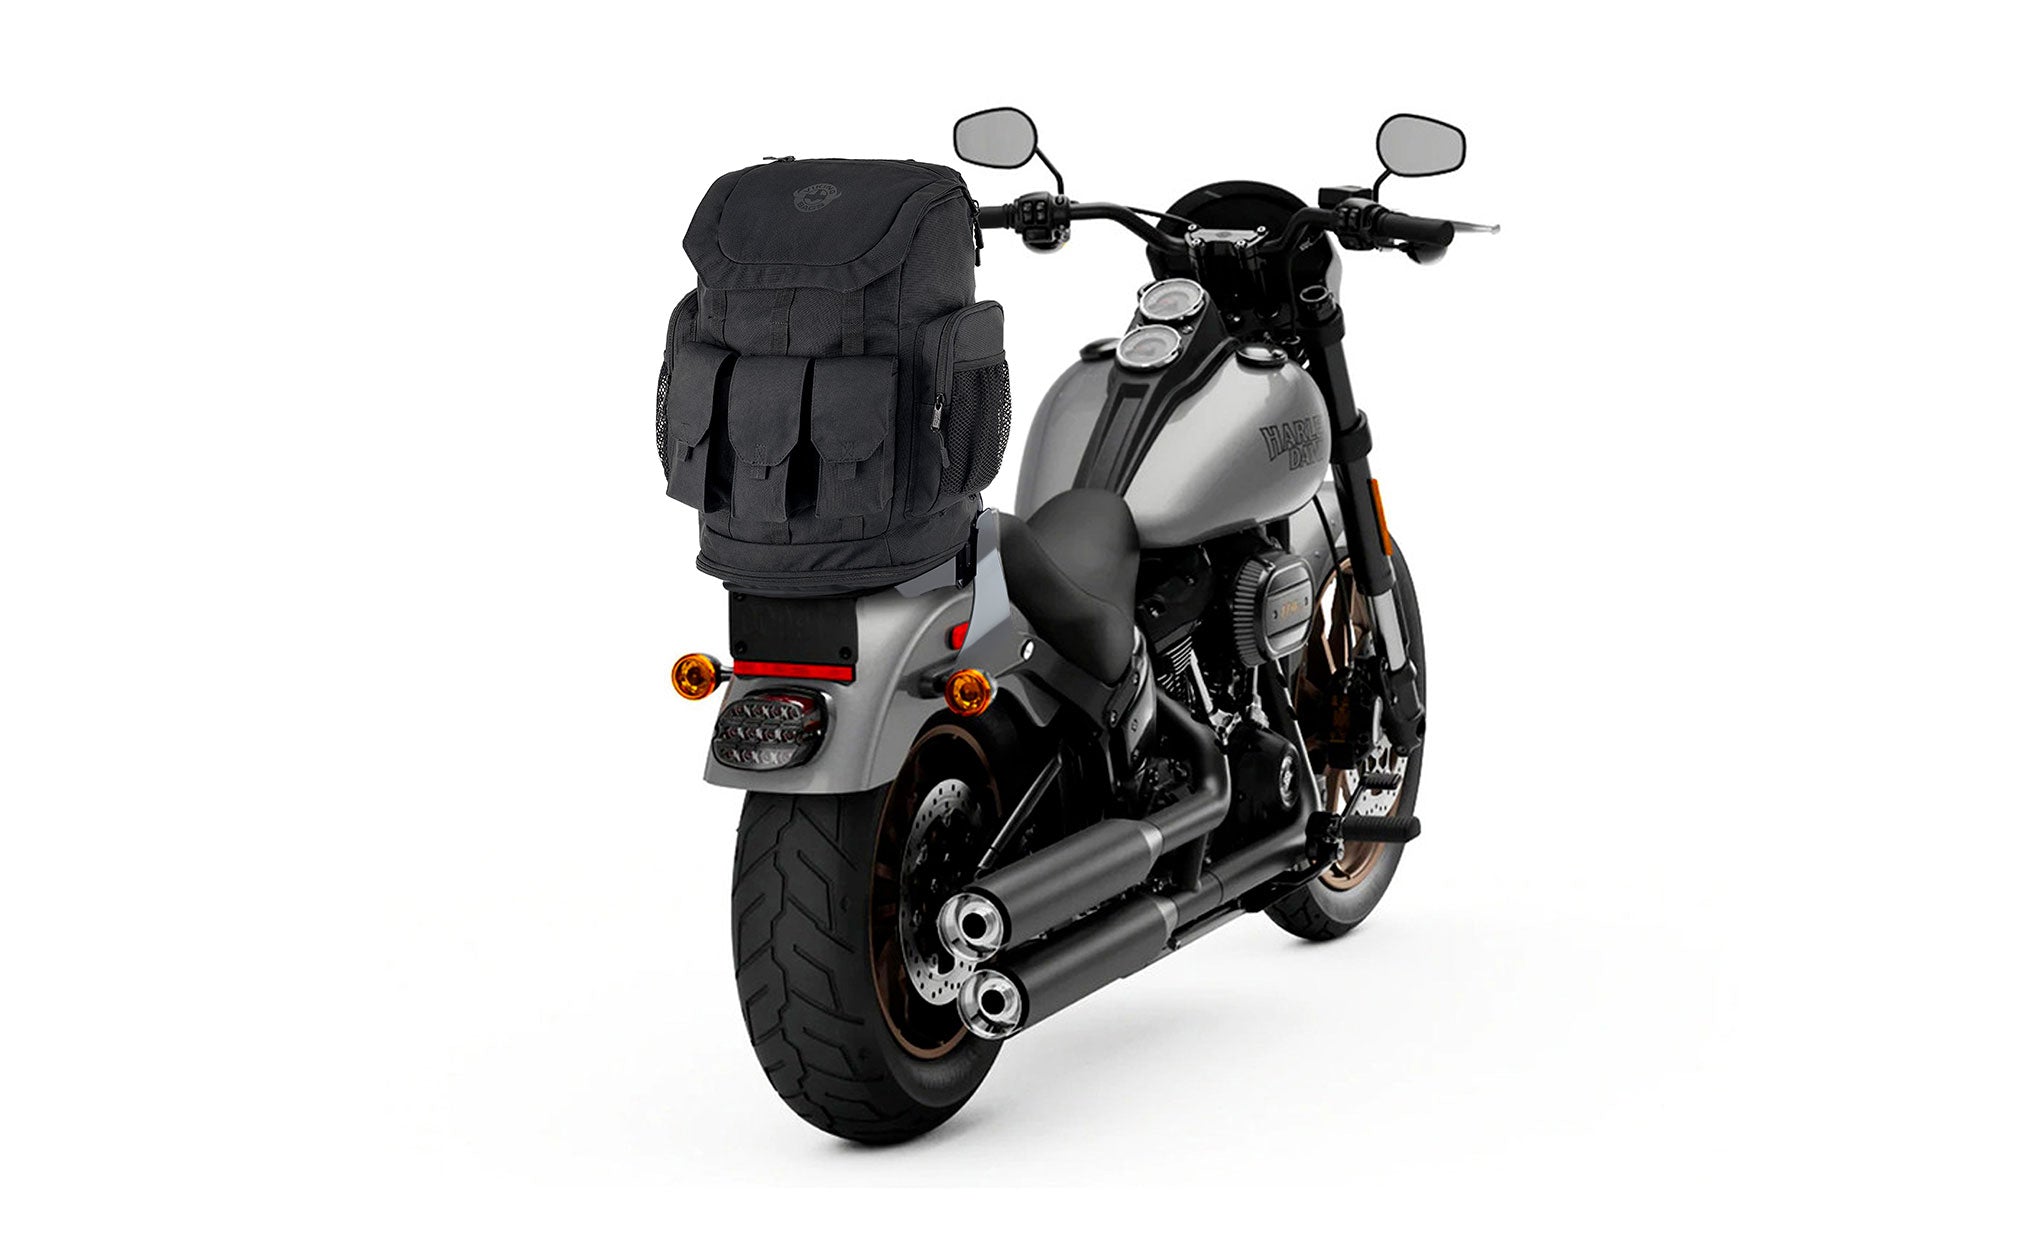 Viking Trident XL Motorcycle Tail Bag for Harley Davidson Bag on Bike View @expand